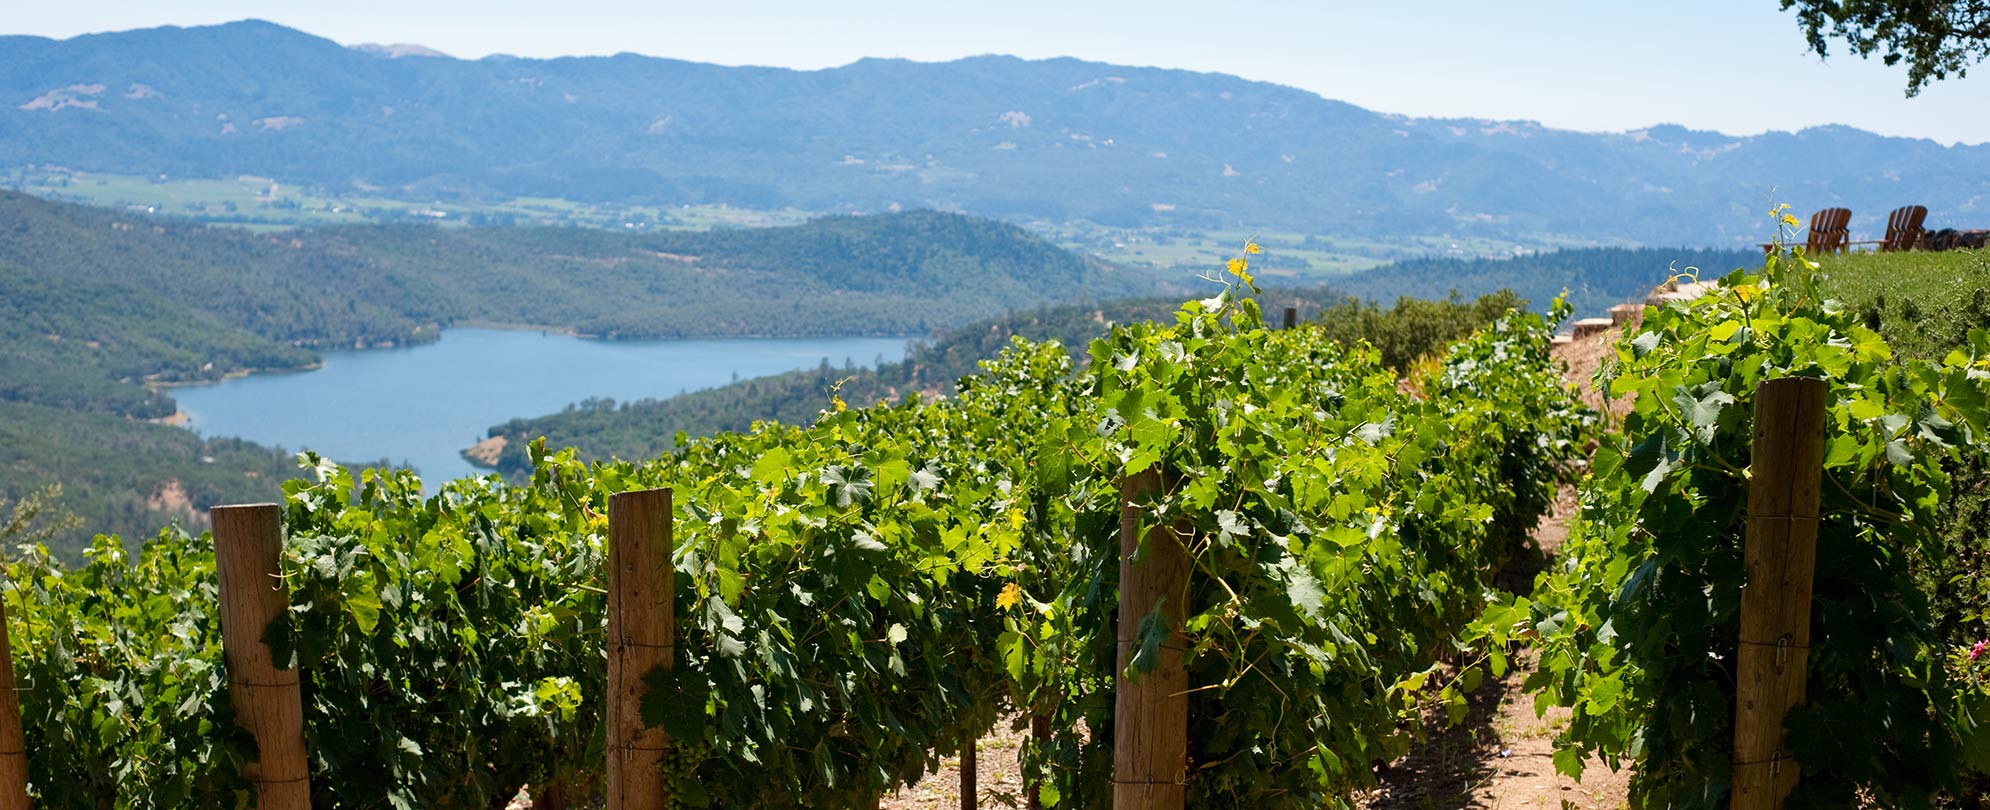 A vineyard overlooking a lake and mountains near San Francisco, California.